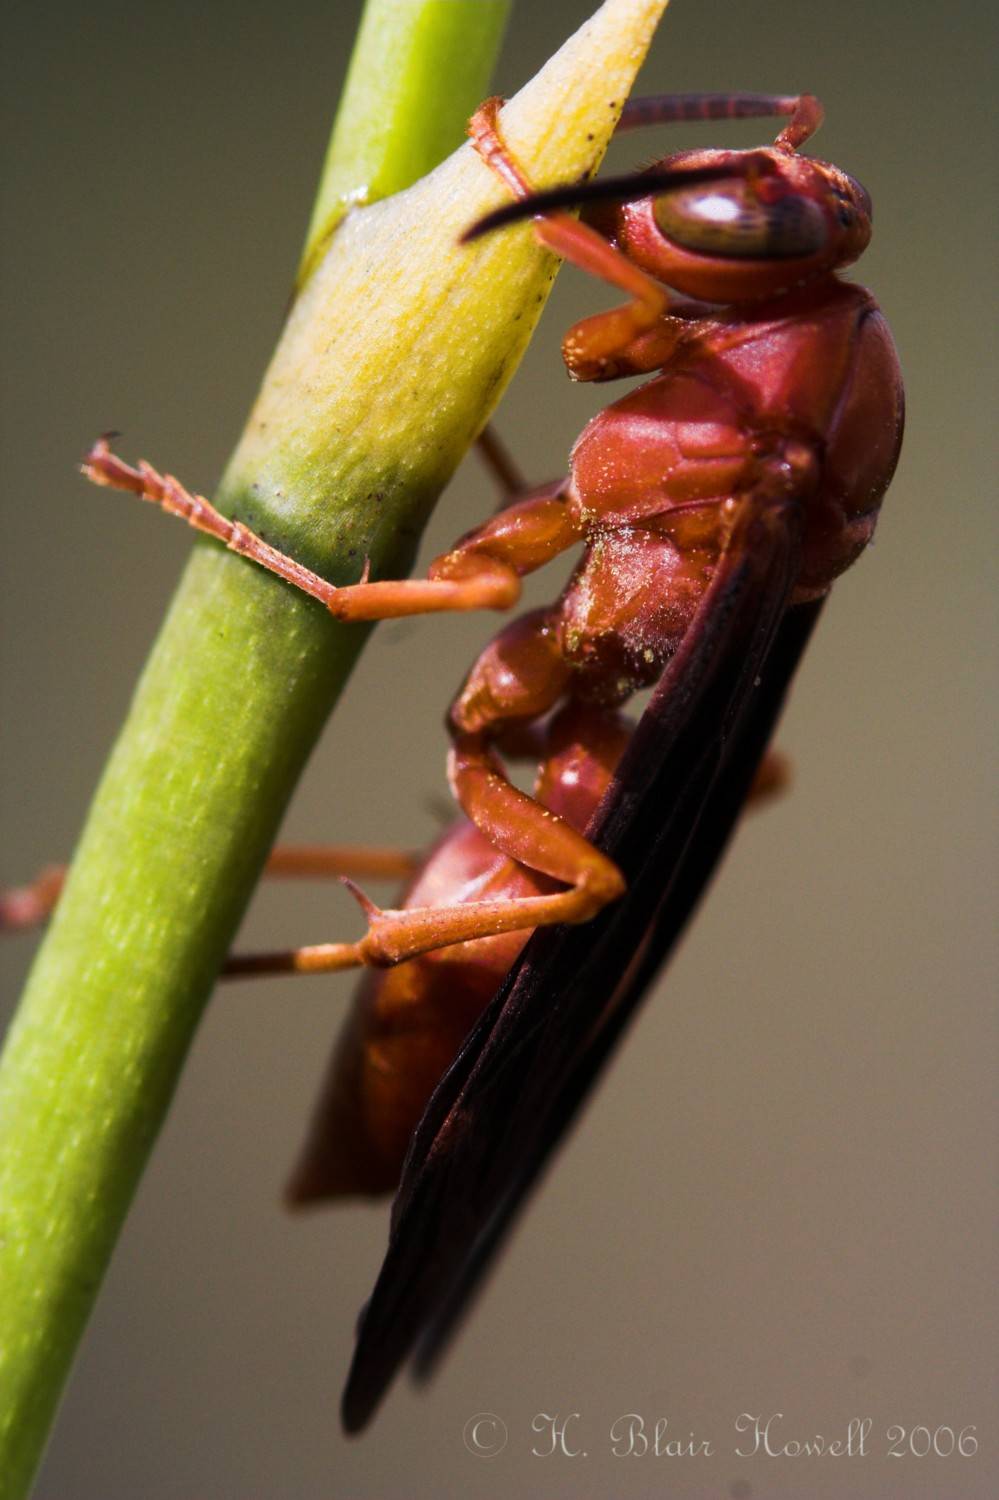 Polistes carolina - Red Wasp